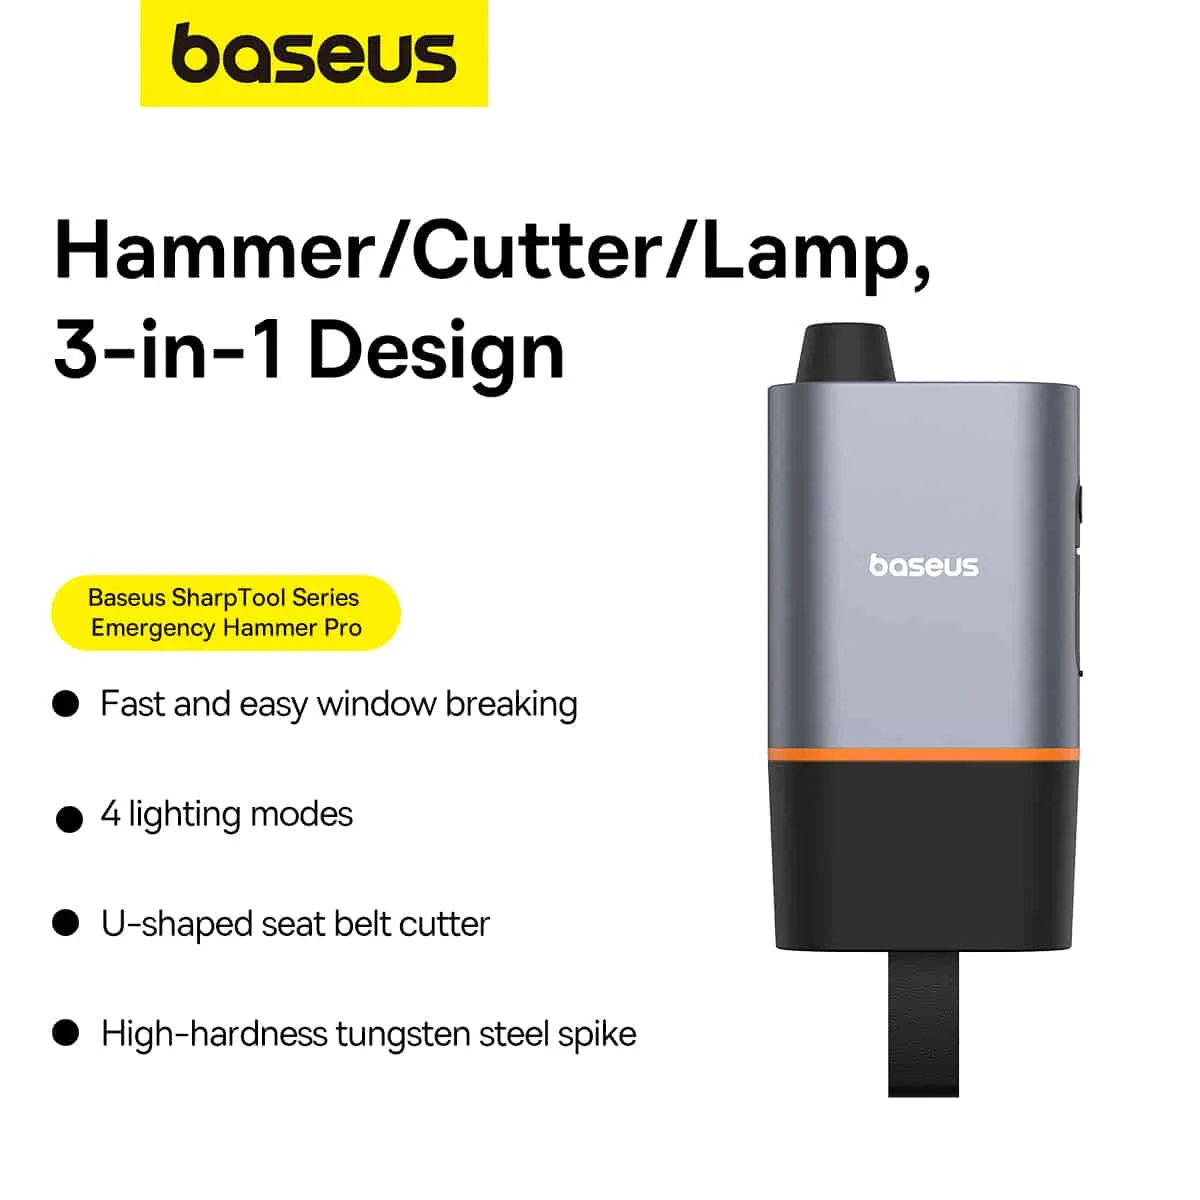 Baseus SharpTool Series Emergency Hammer Pro